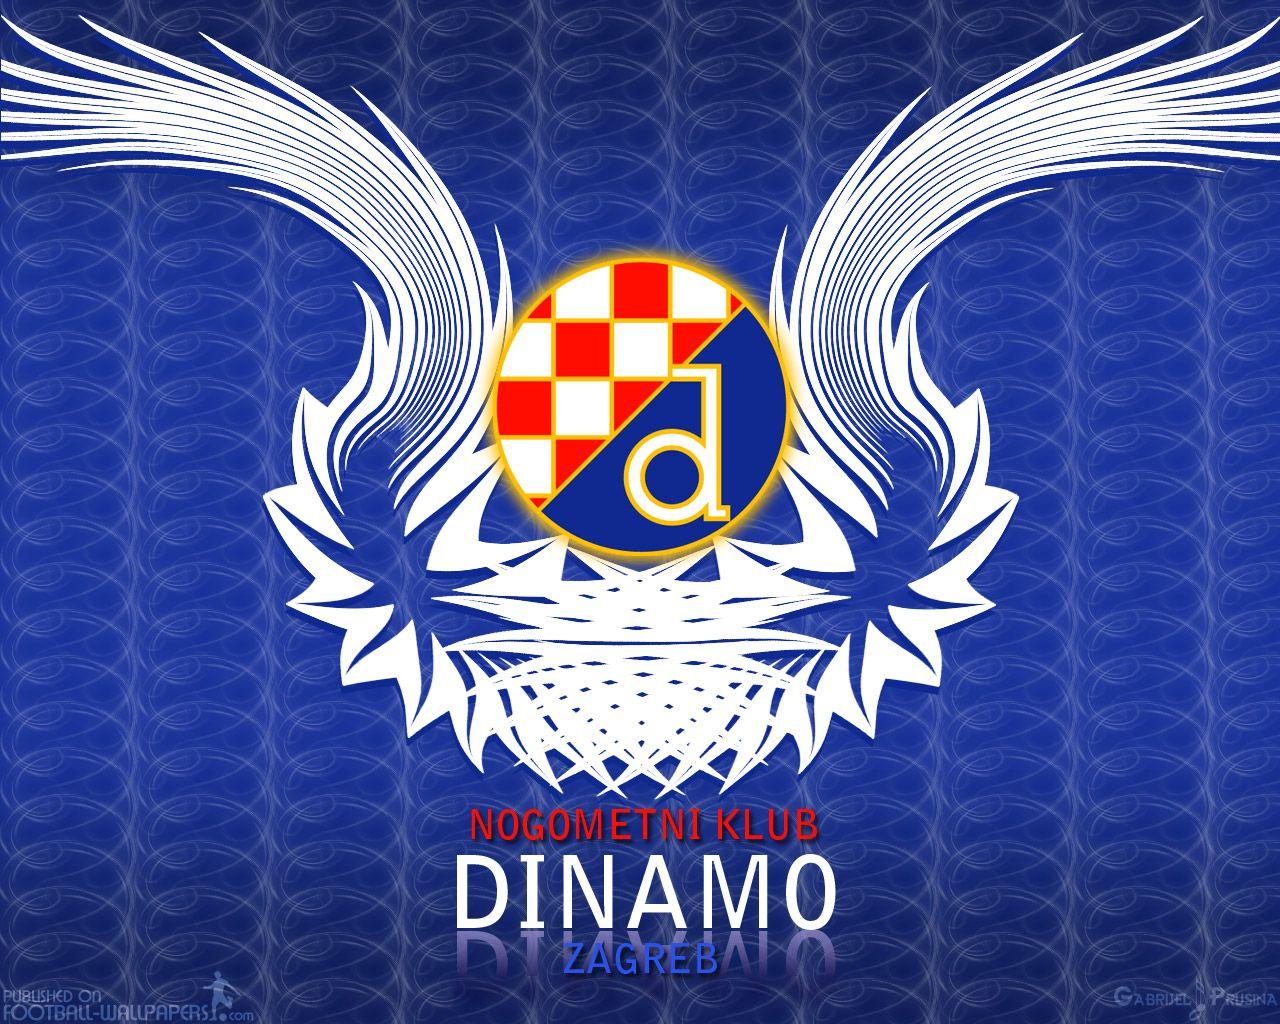 Dinamo Zagreb Football Wallpaper